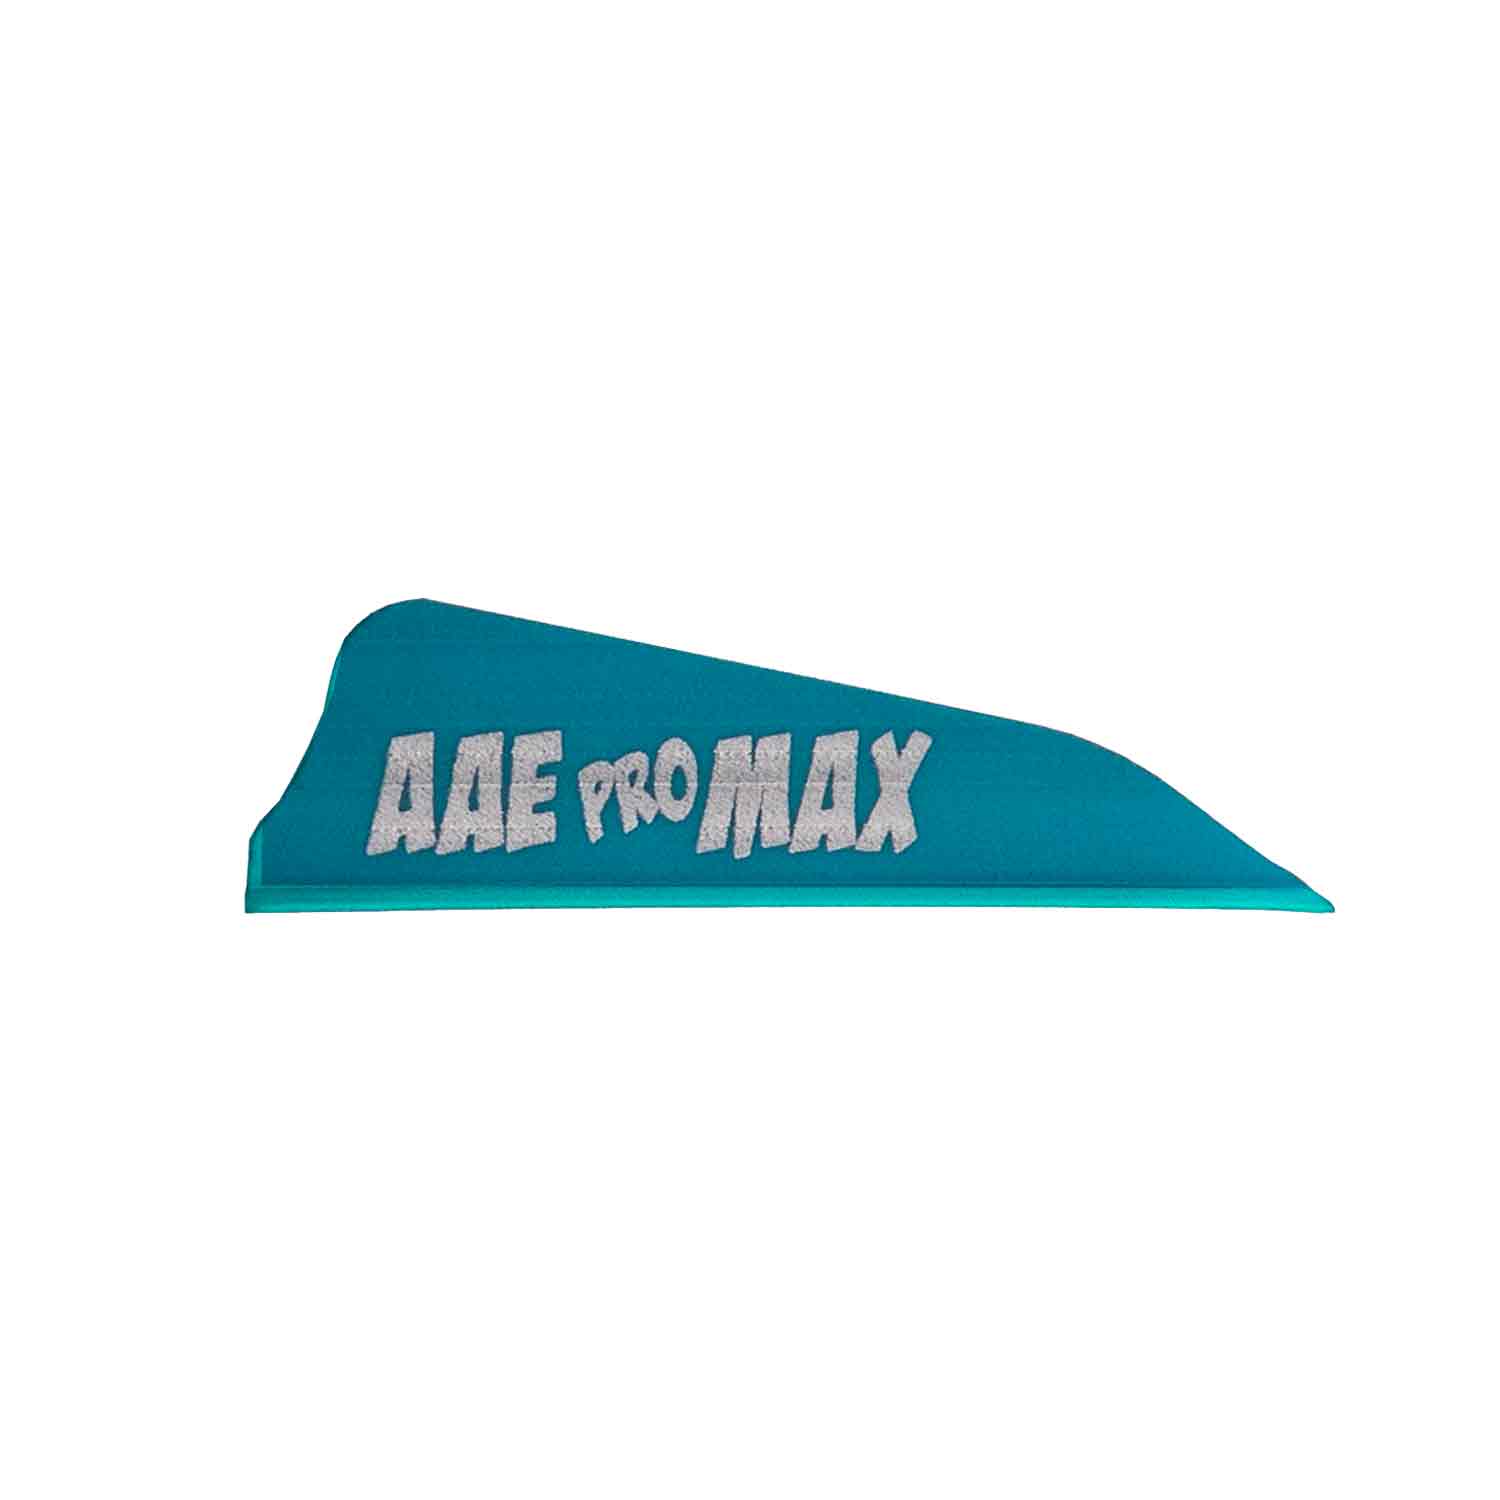 AAE Pro Max Hunter Vanes (50-pk)